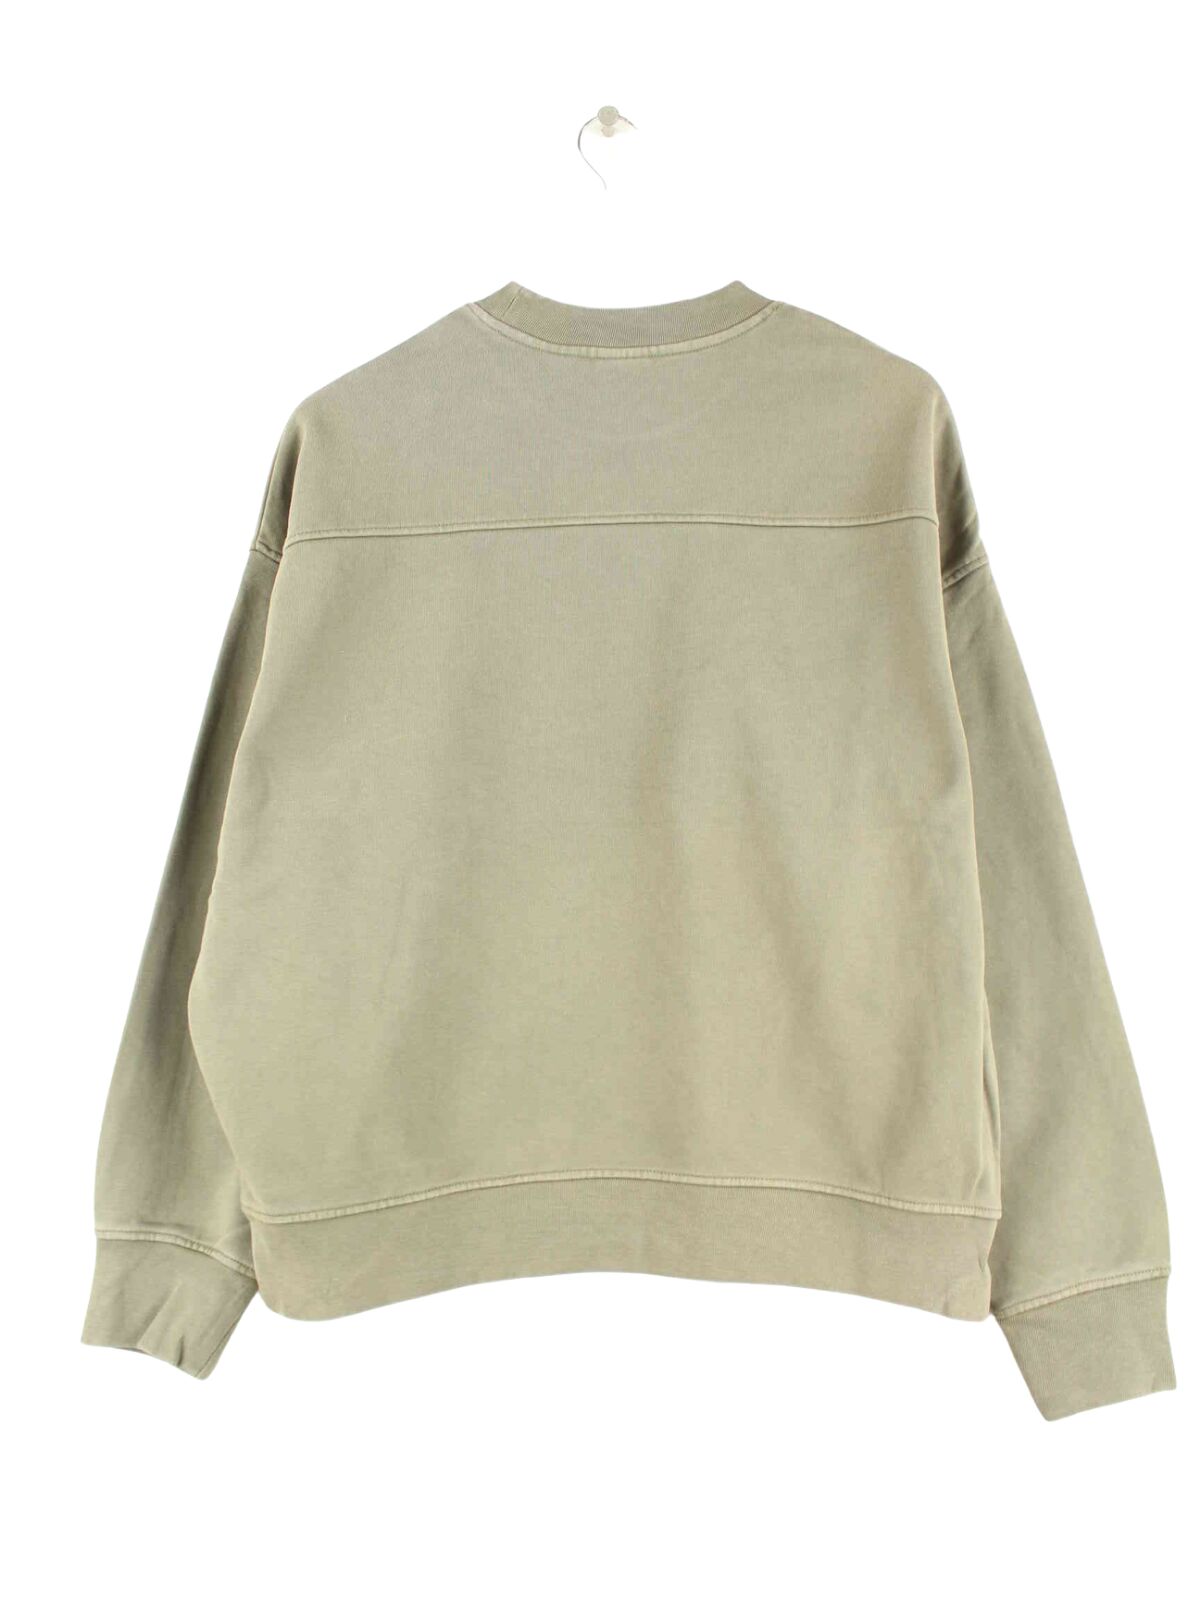 Levi's Basic Sweater Braun S (back image)